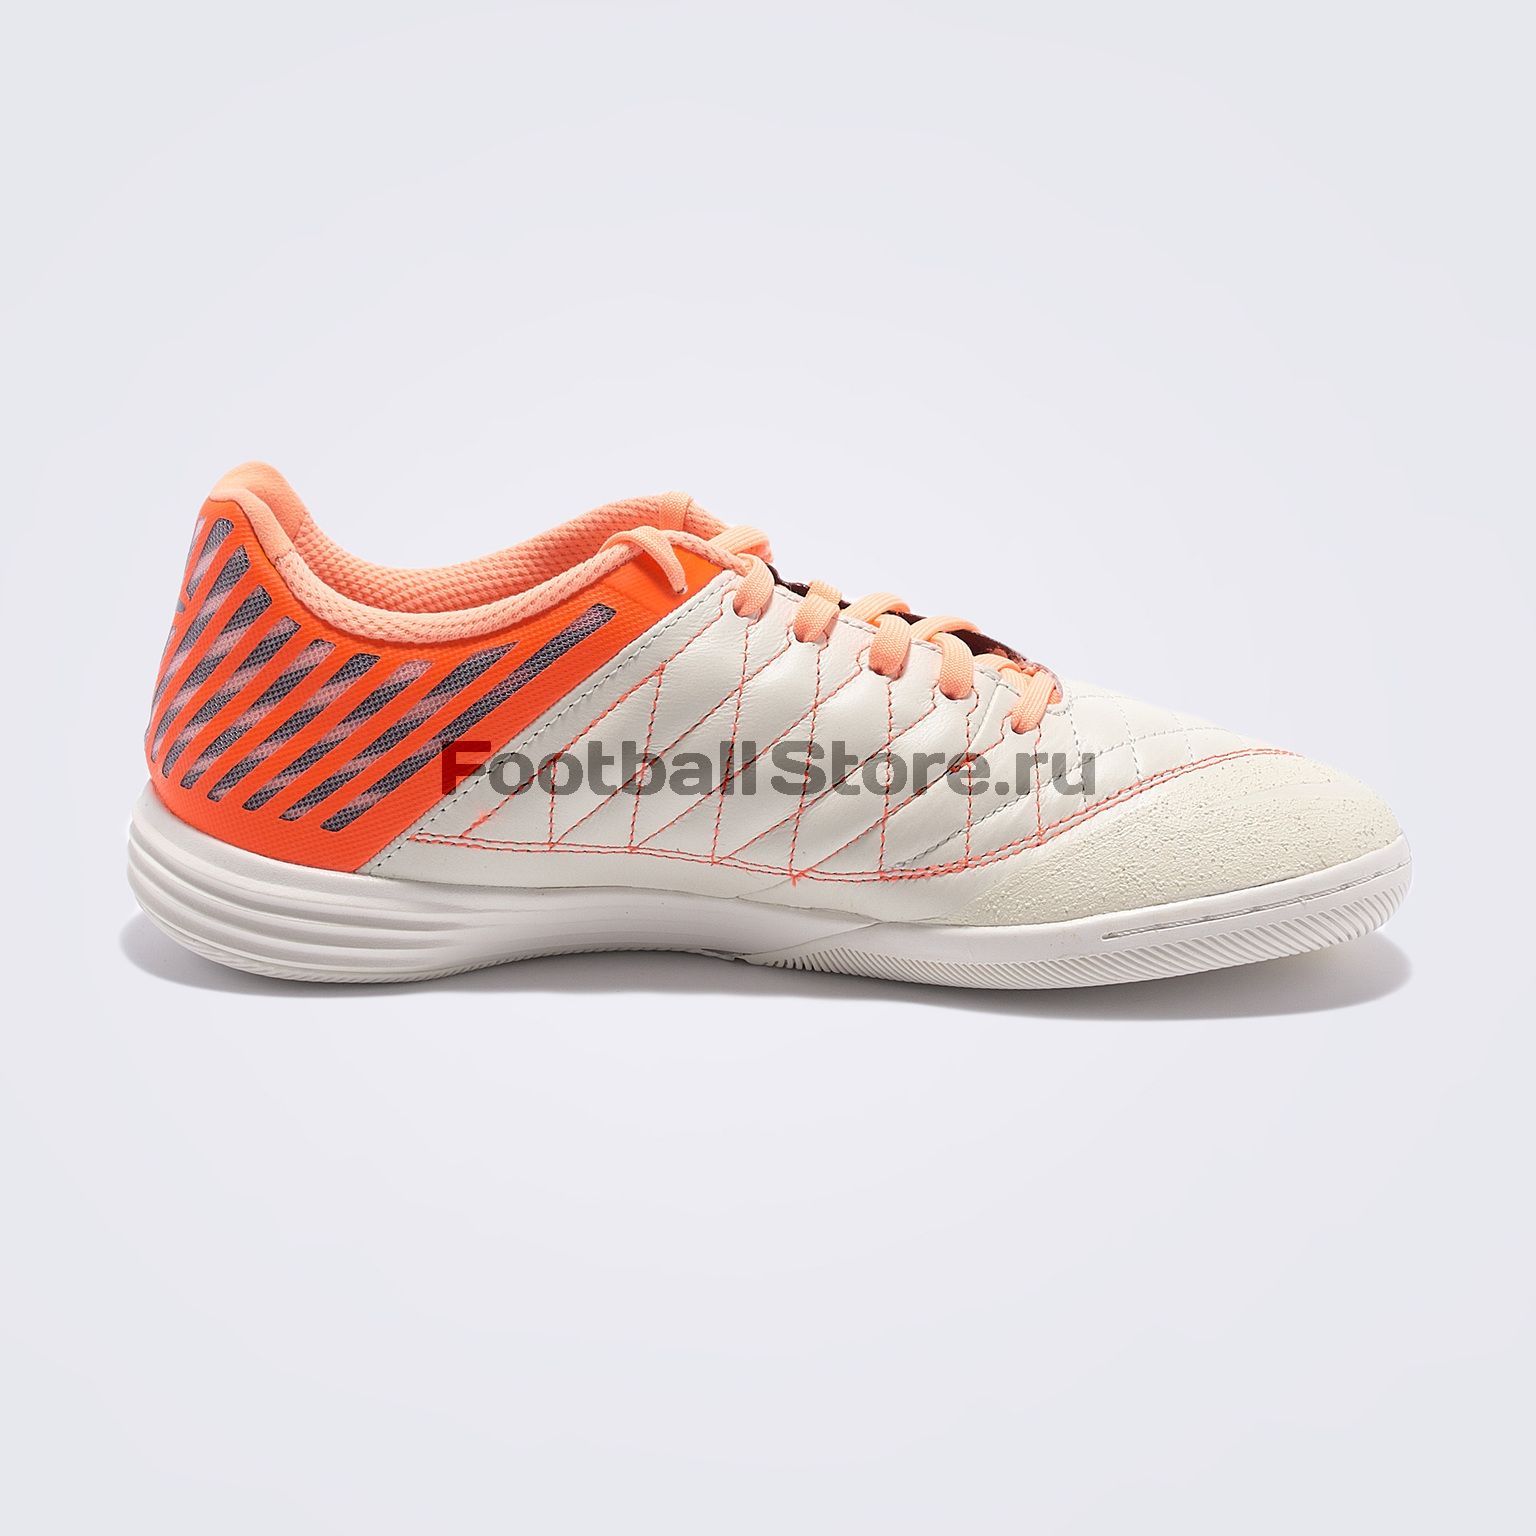 Футзалки Nike LunarGato II 580456-128